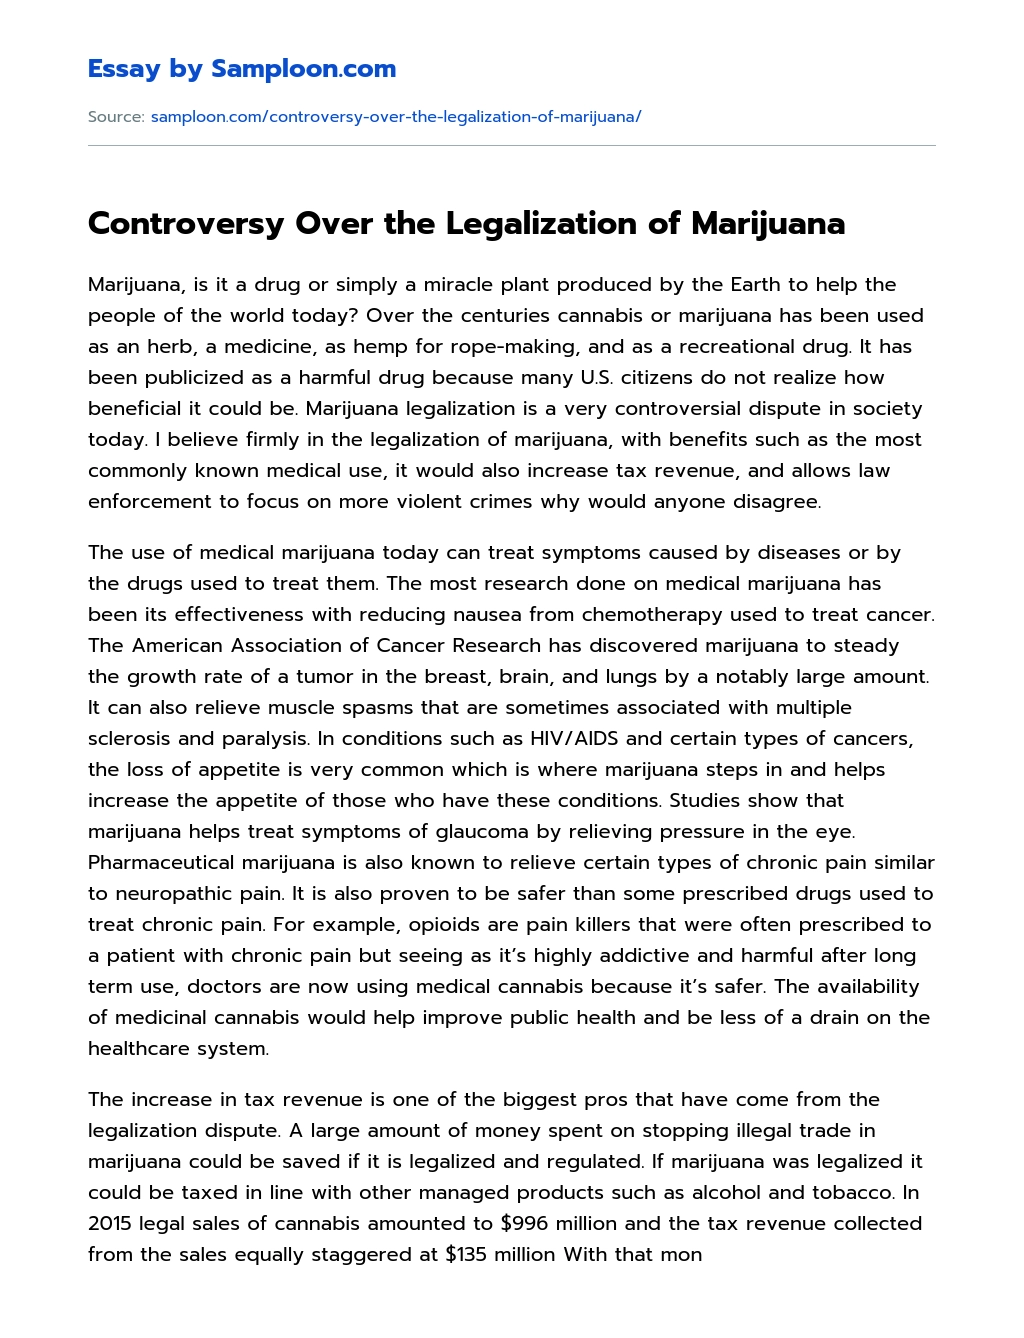 Controversy Over the Legalization of Marijuana essay